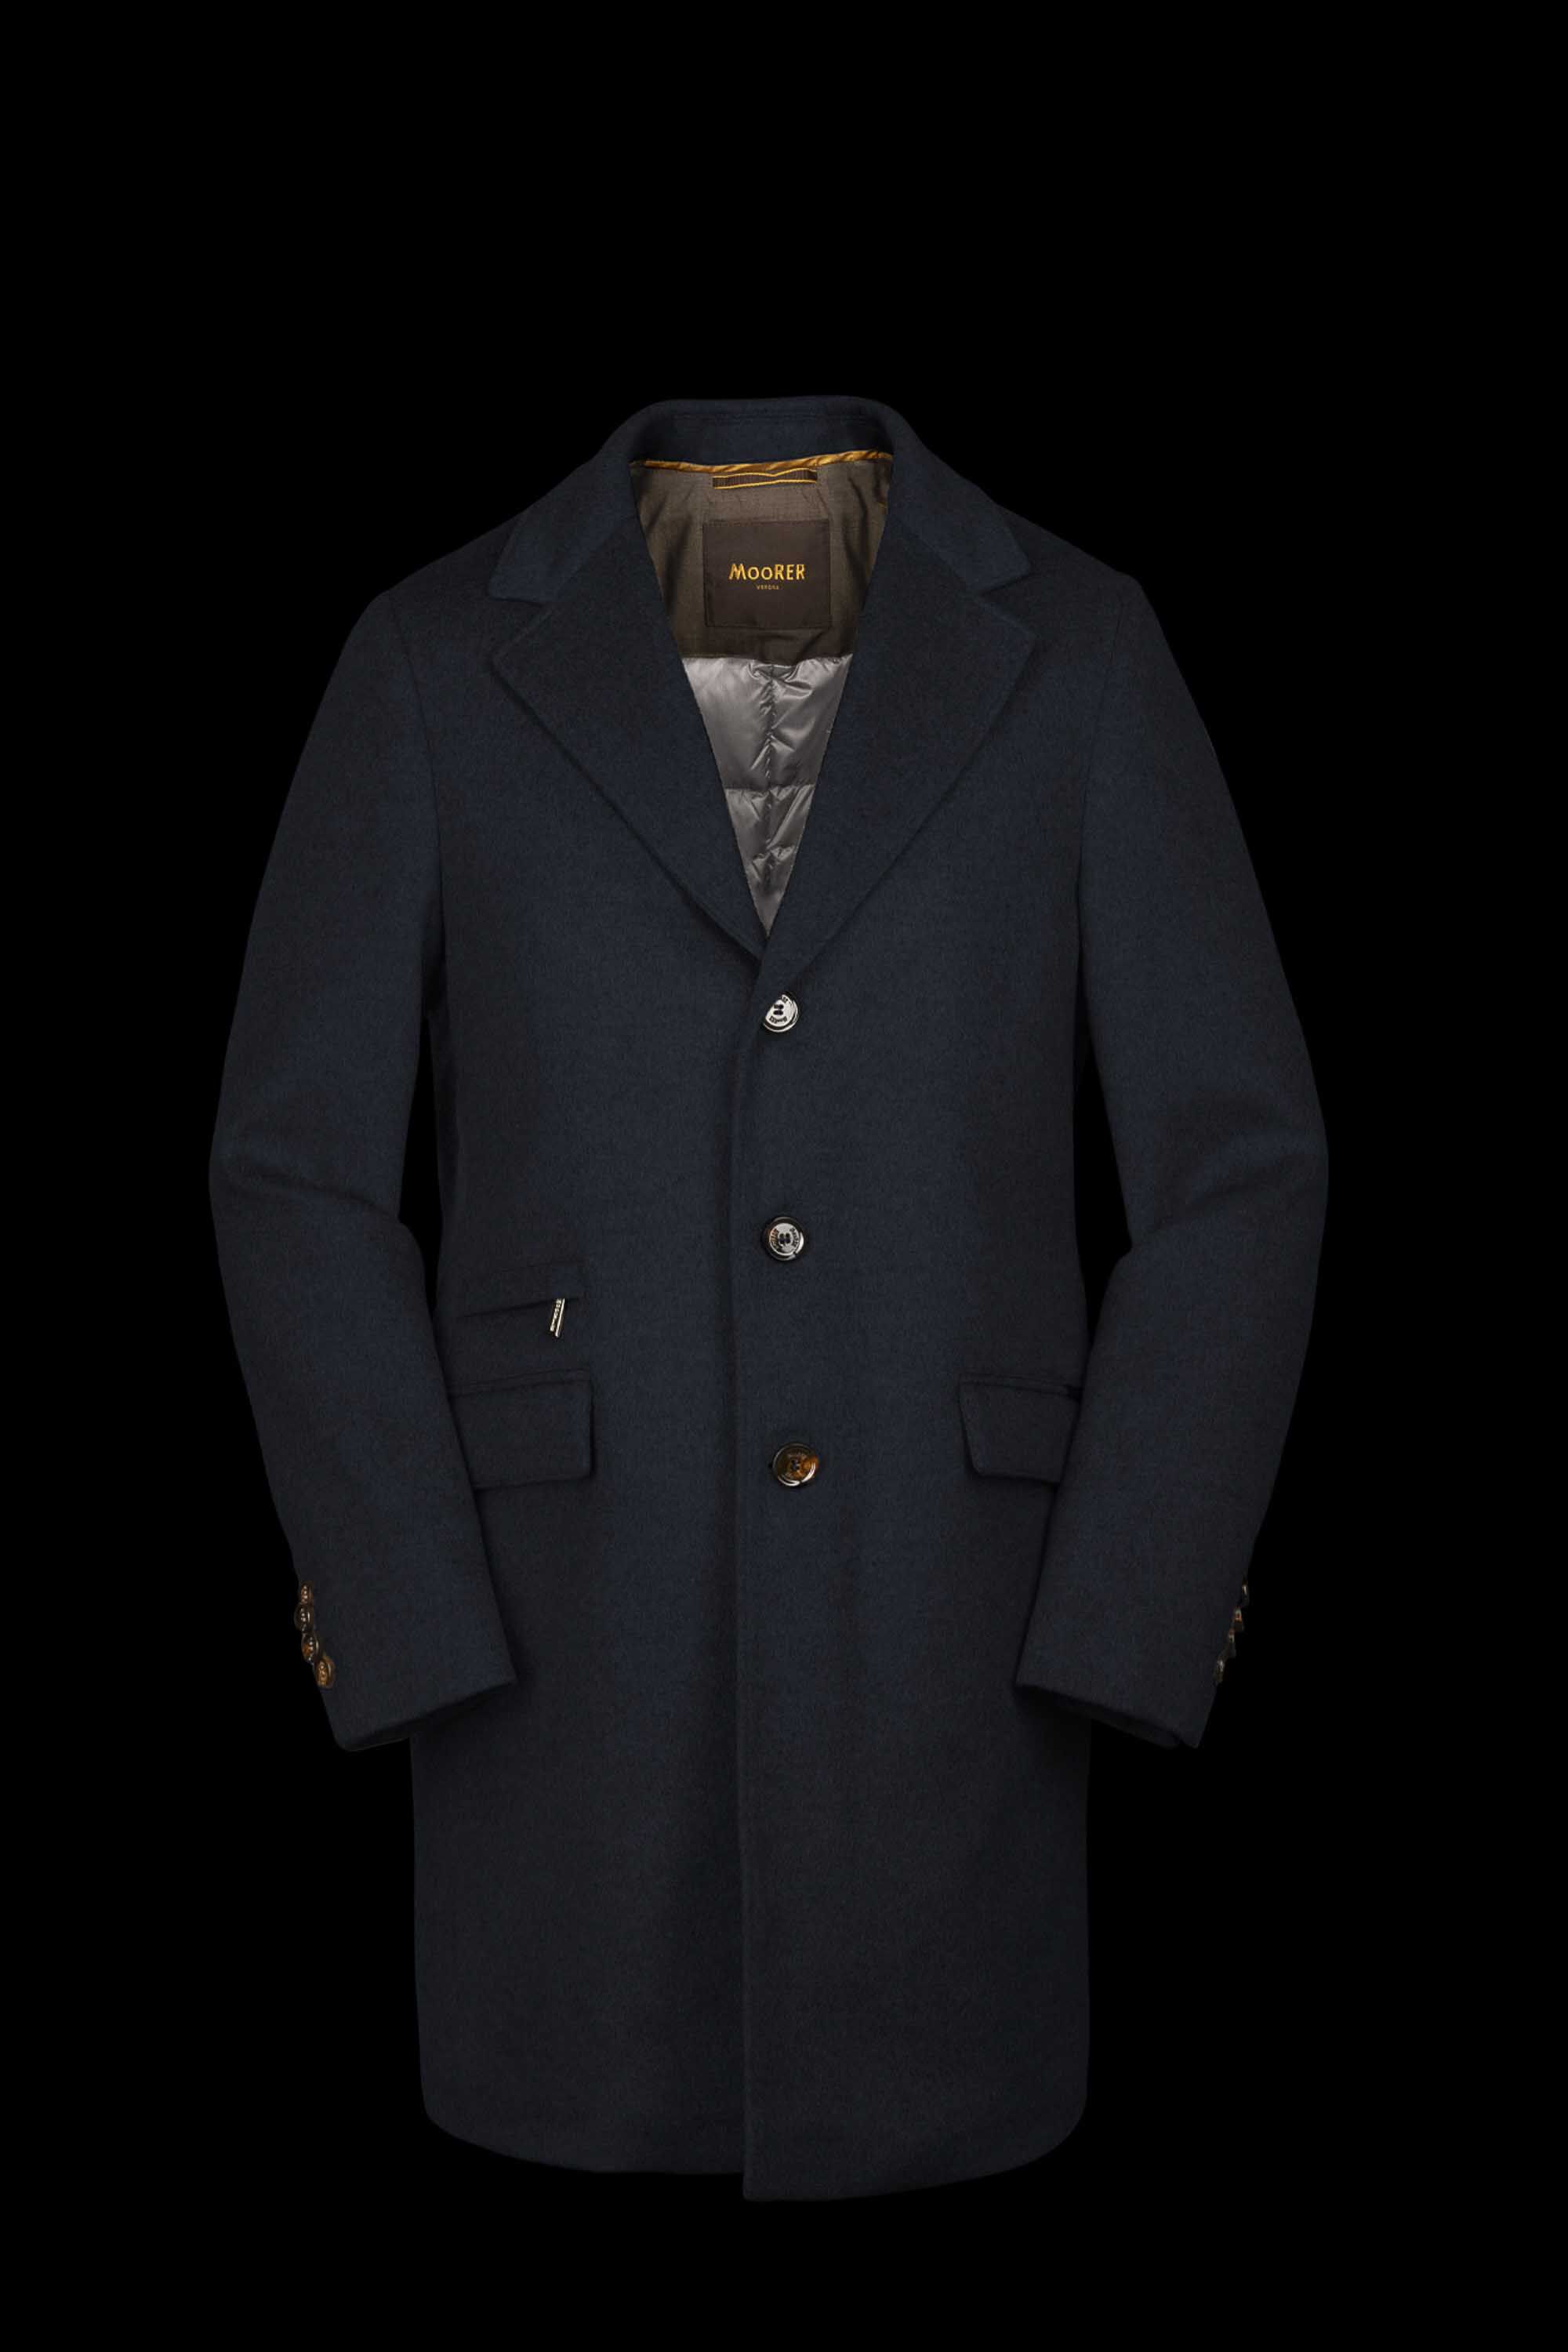 HARRIS-LE in NAVY: Luxury Italian Coats | MooRER®